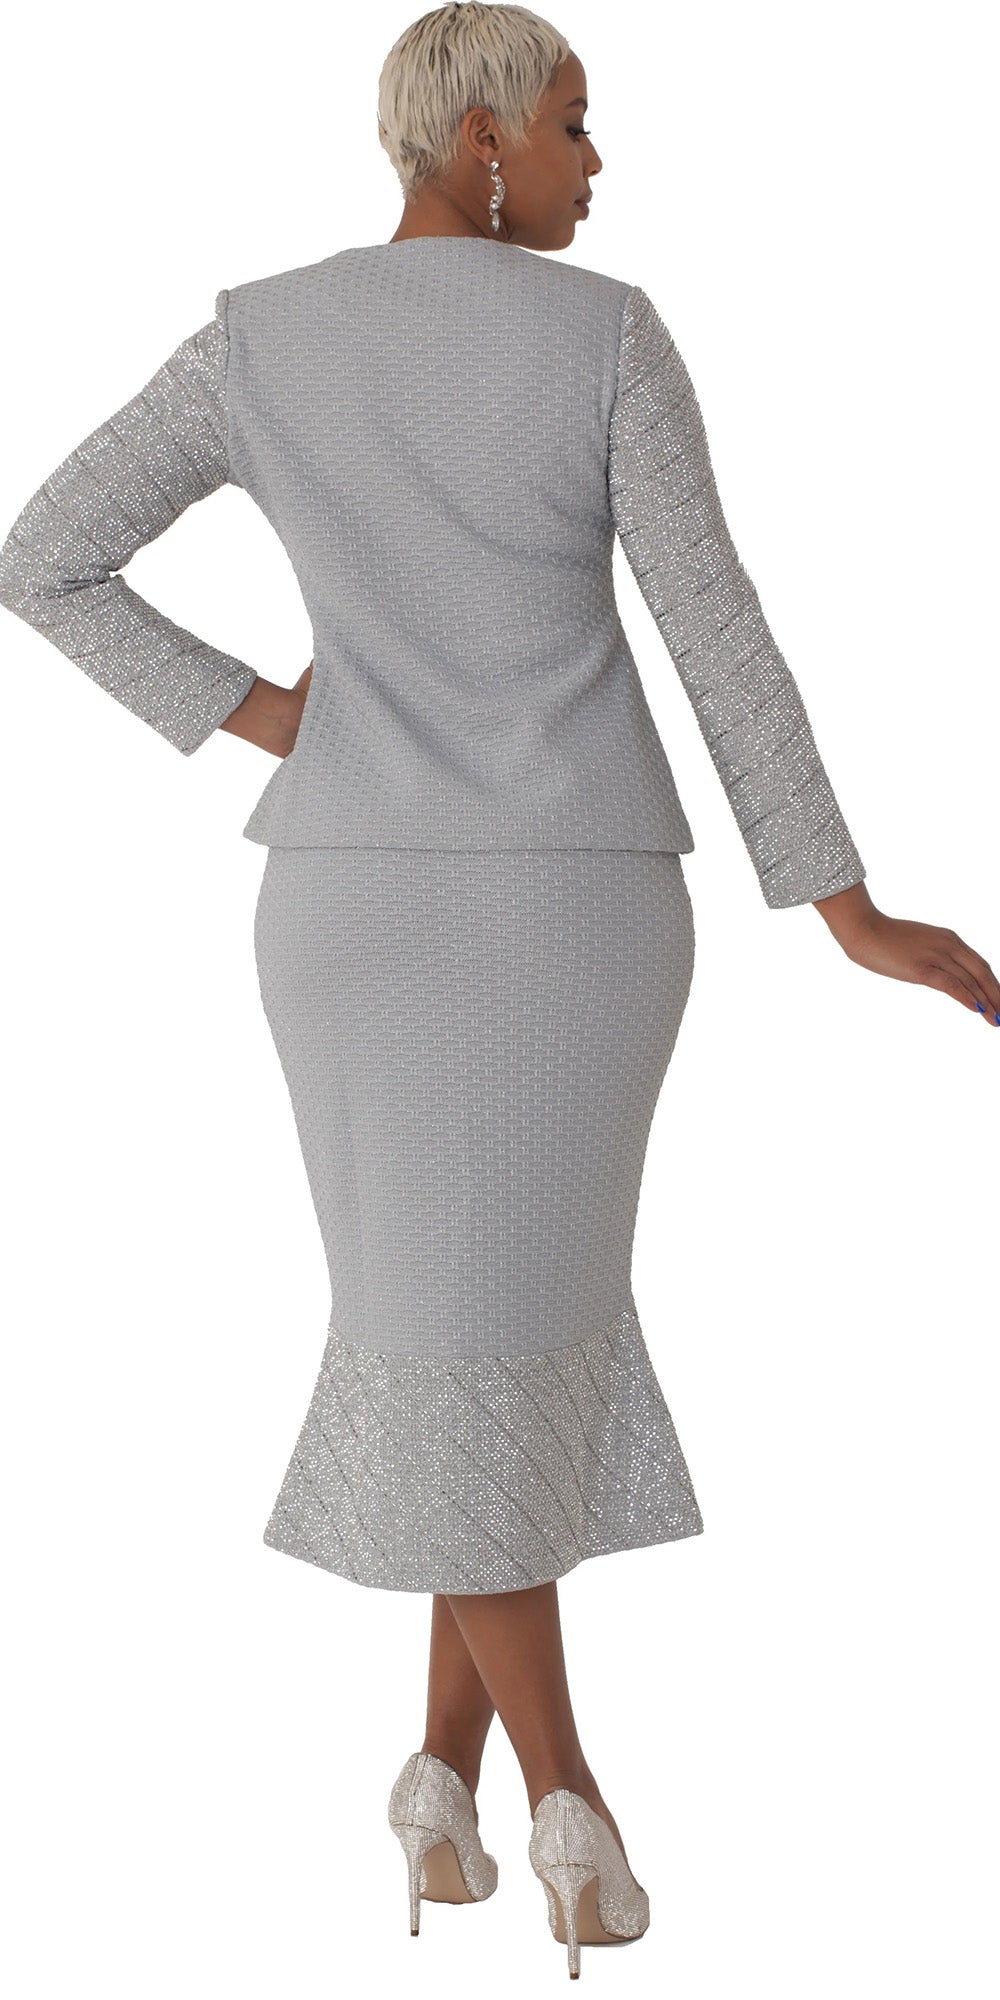 Liorah Knits 7304 - Silver - 2 PC Rhinestone Embellished Knit Skirt Suit